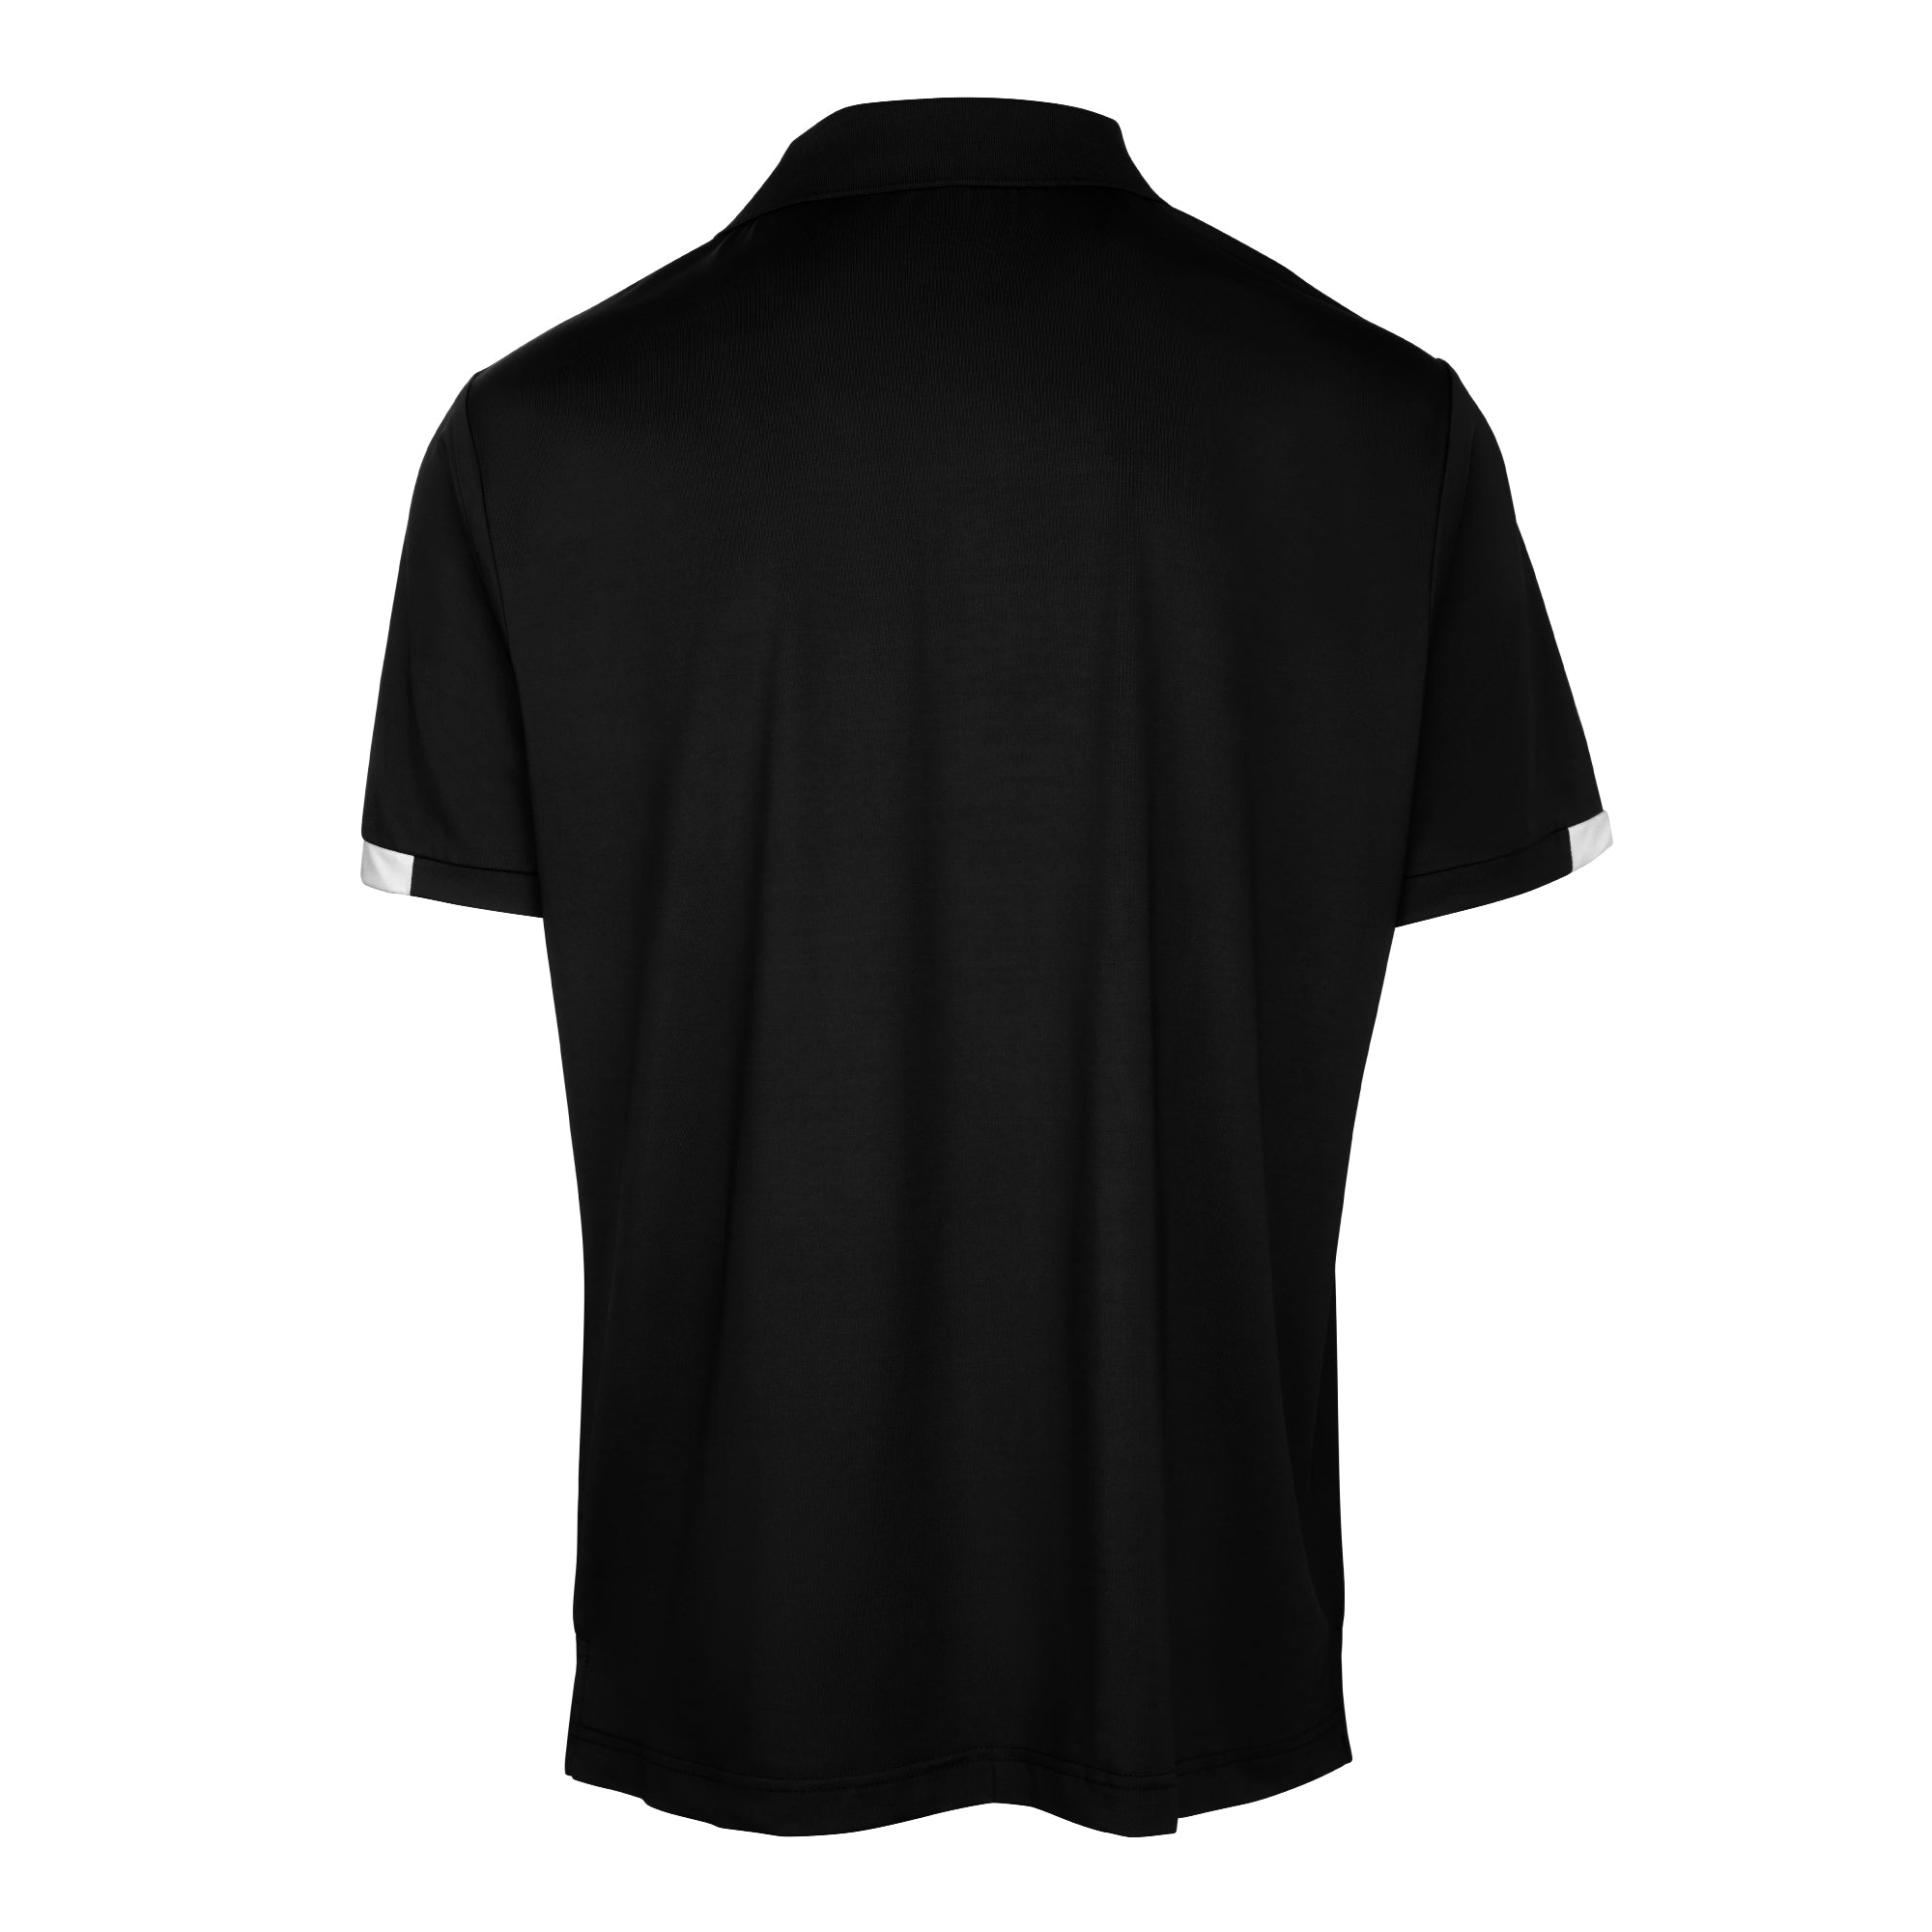 Dri-Fit French Golf Shirt-Men's Bold Two Line T-shirt 6955 - My Golf Shirts